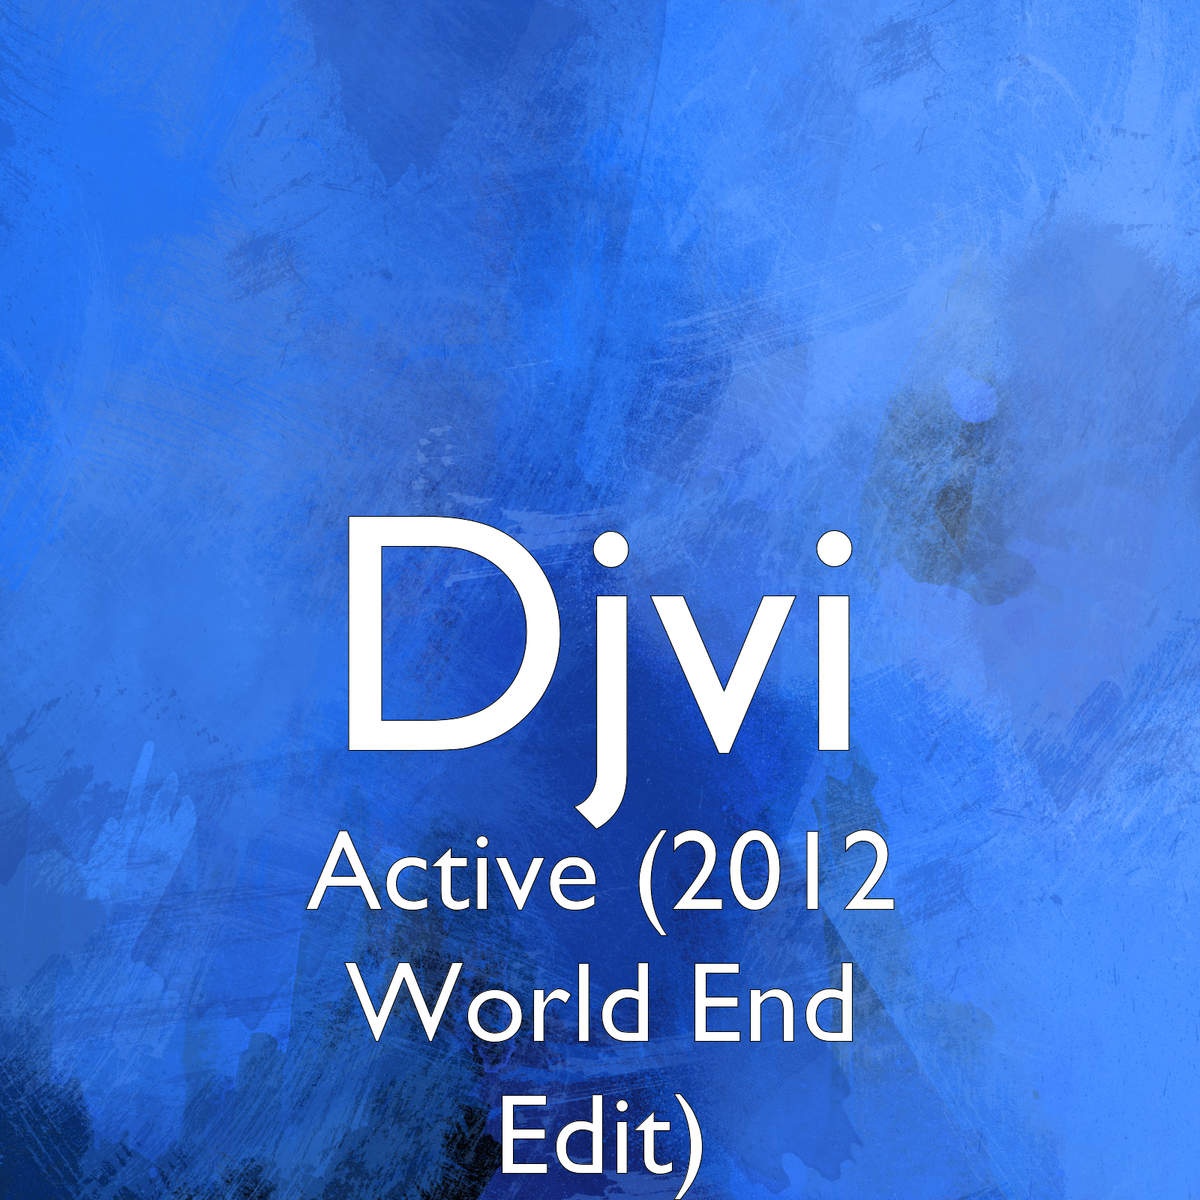 Active (2012 World End Edit)